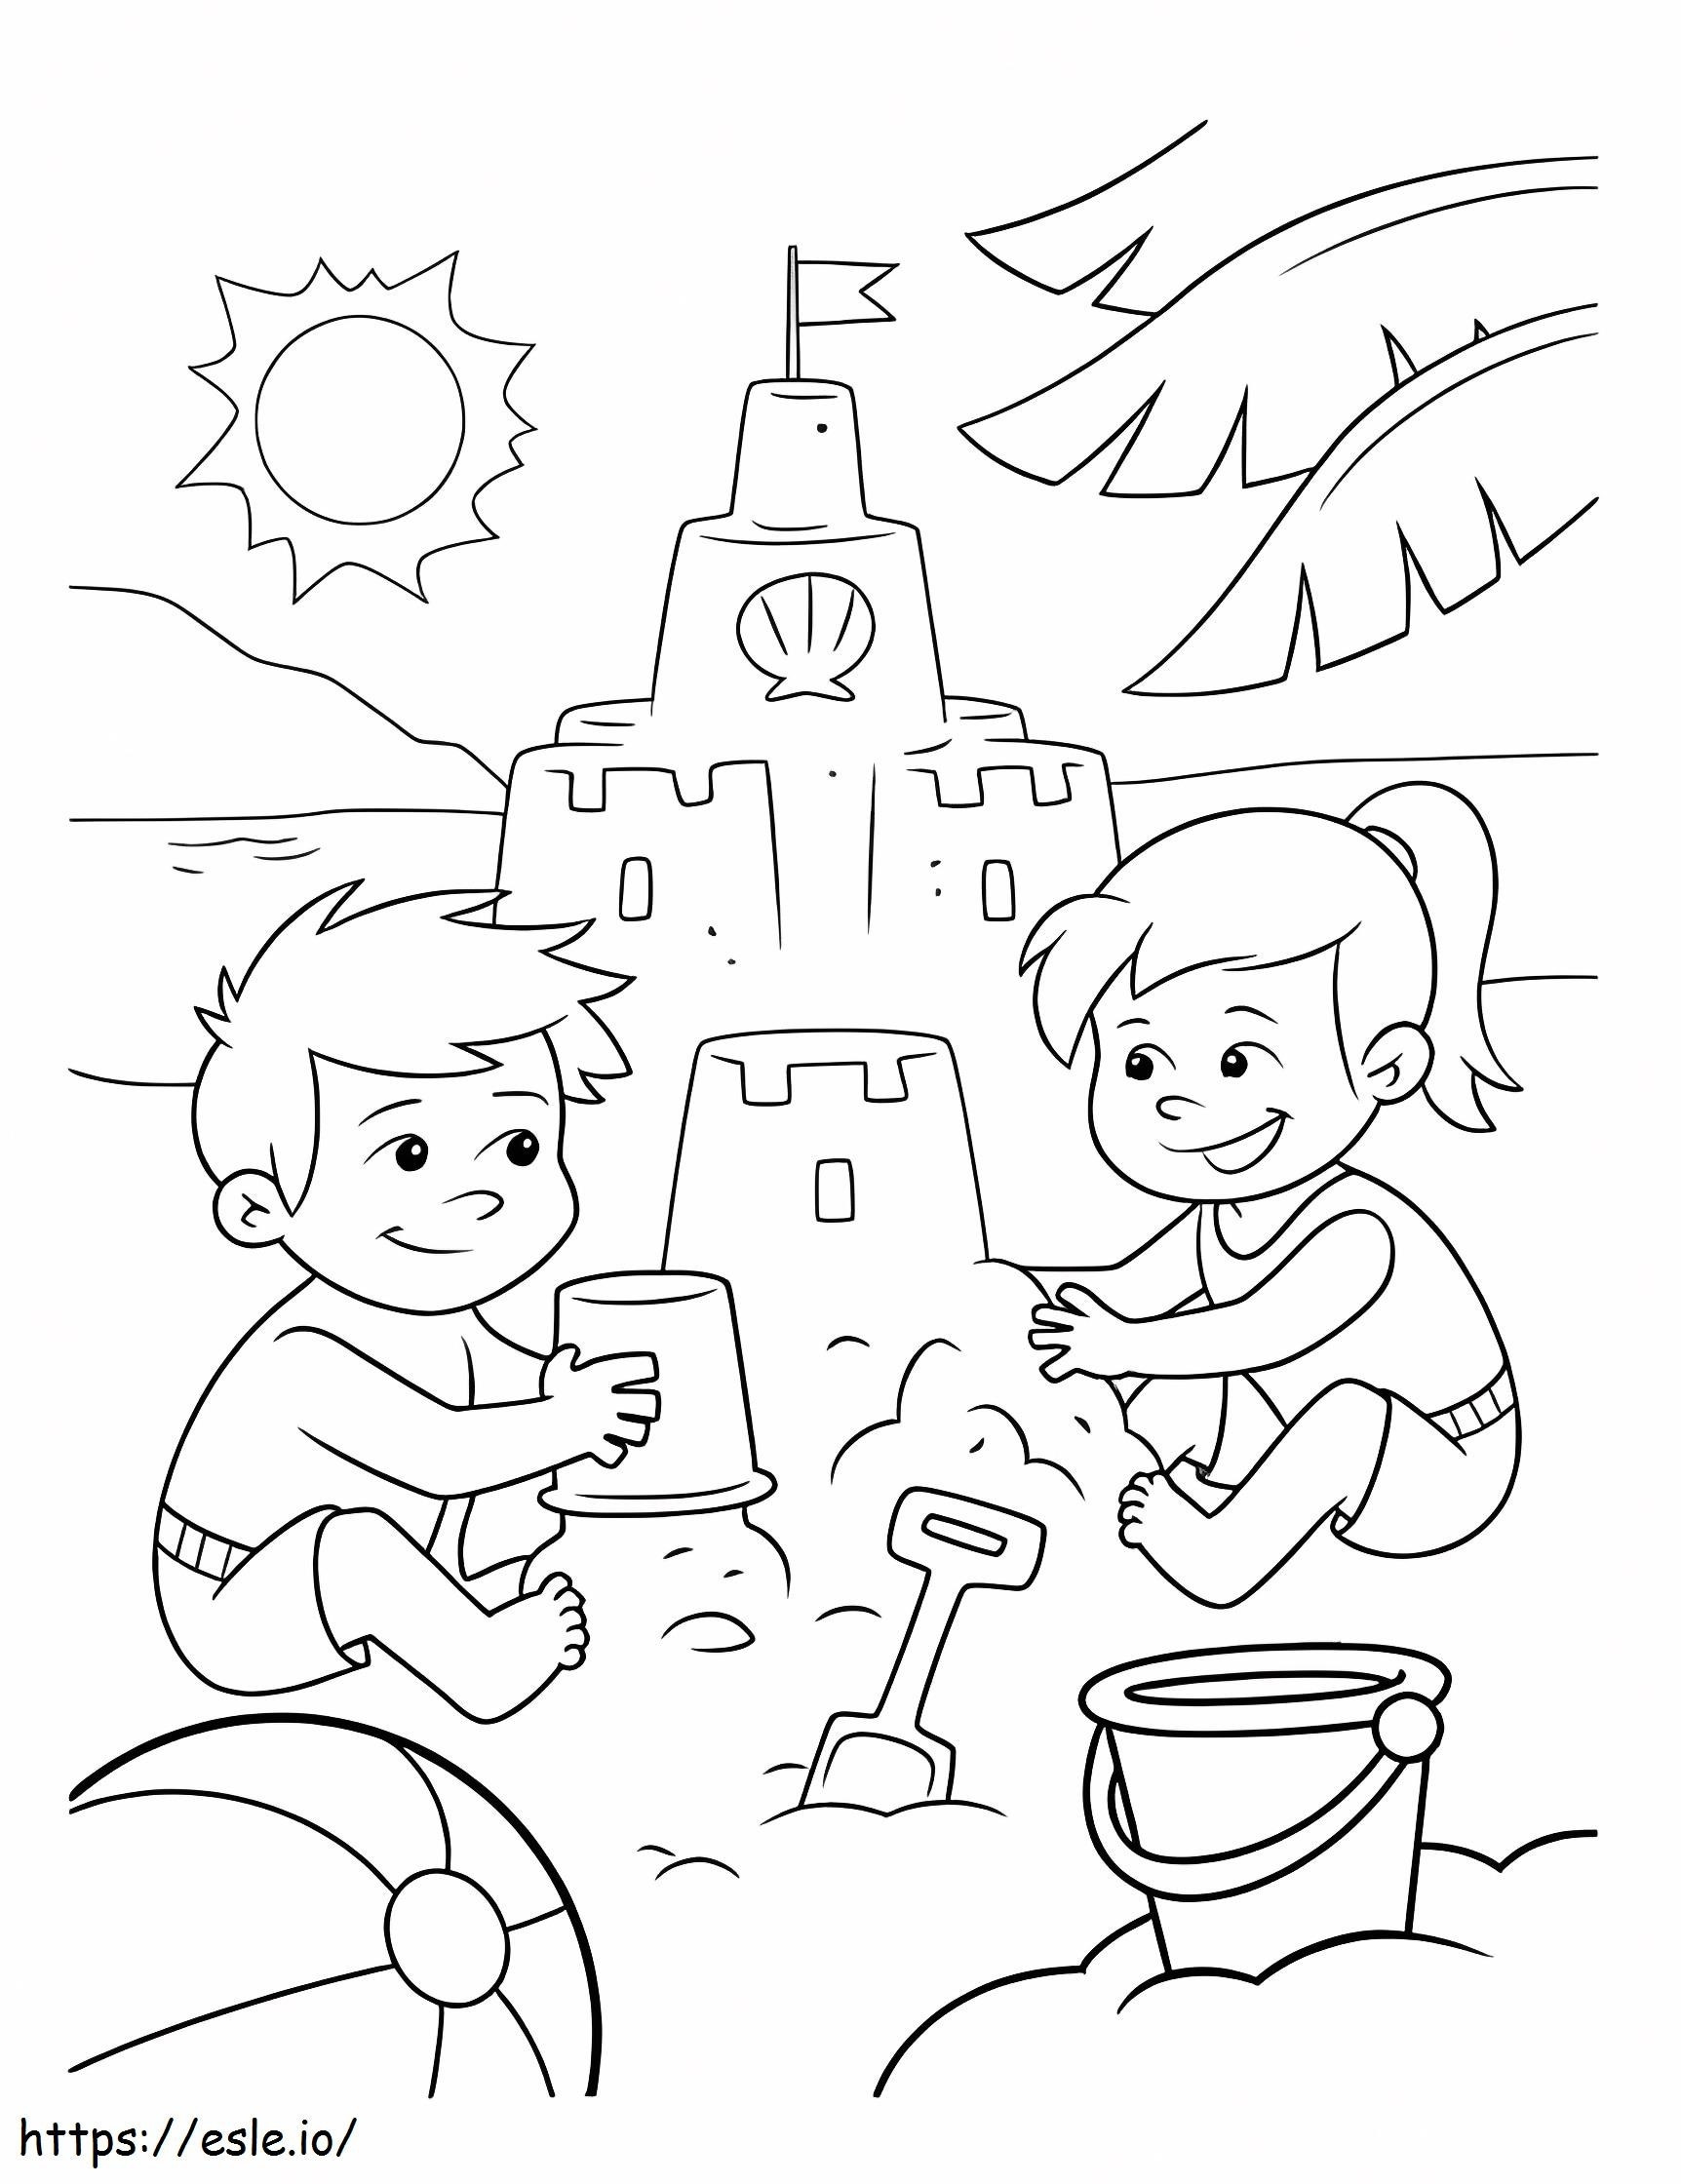 Building Sandcastle coloring page